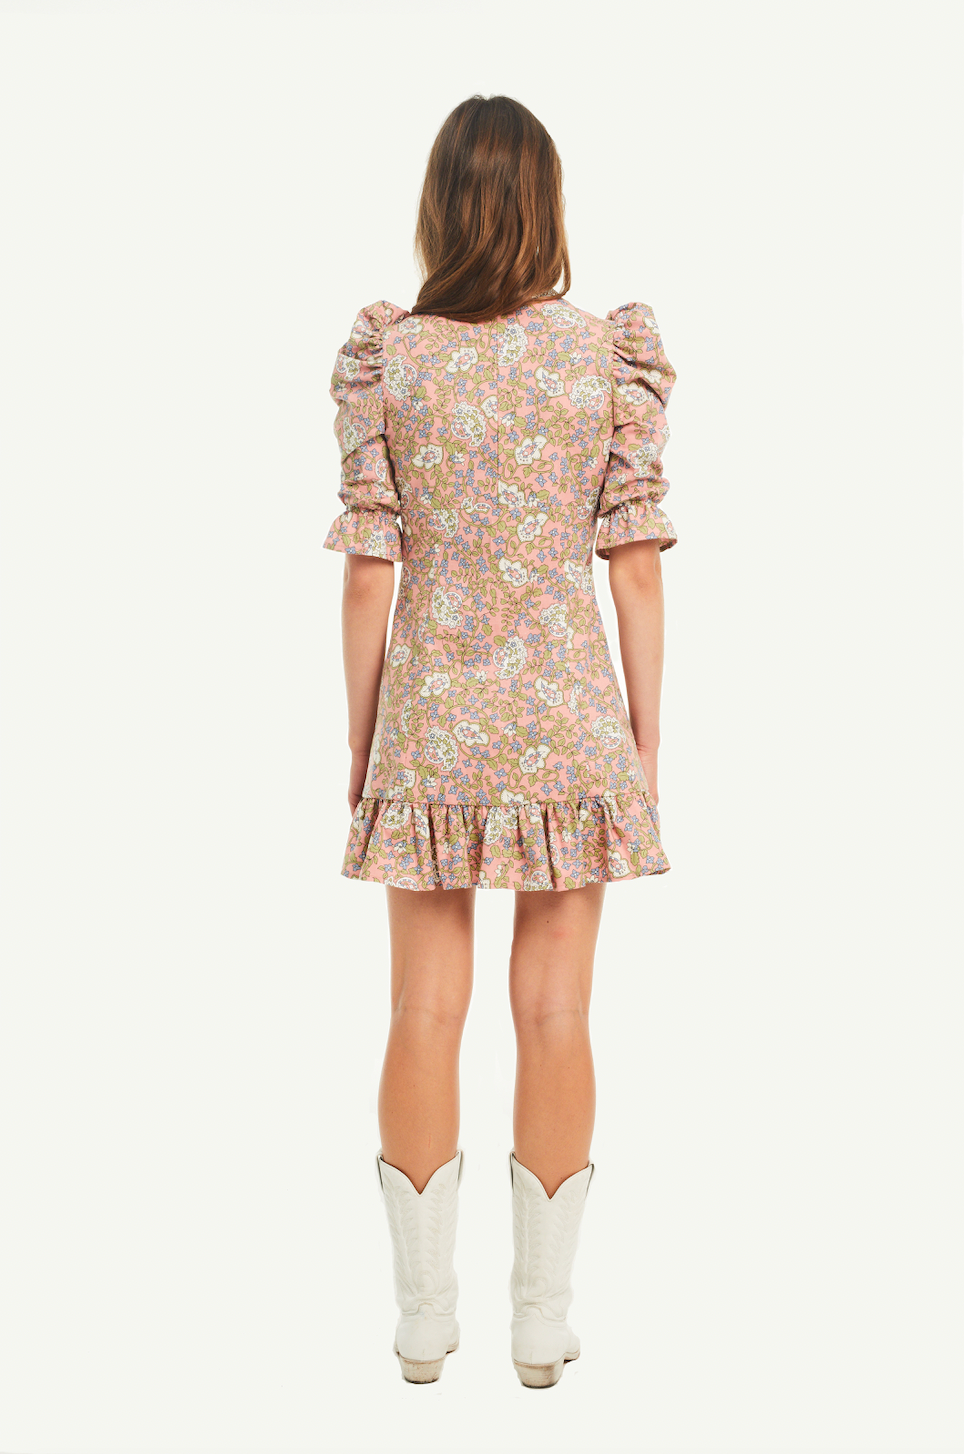 DALIA - short cotton dress with Dumbarton pattern